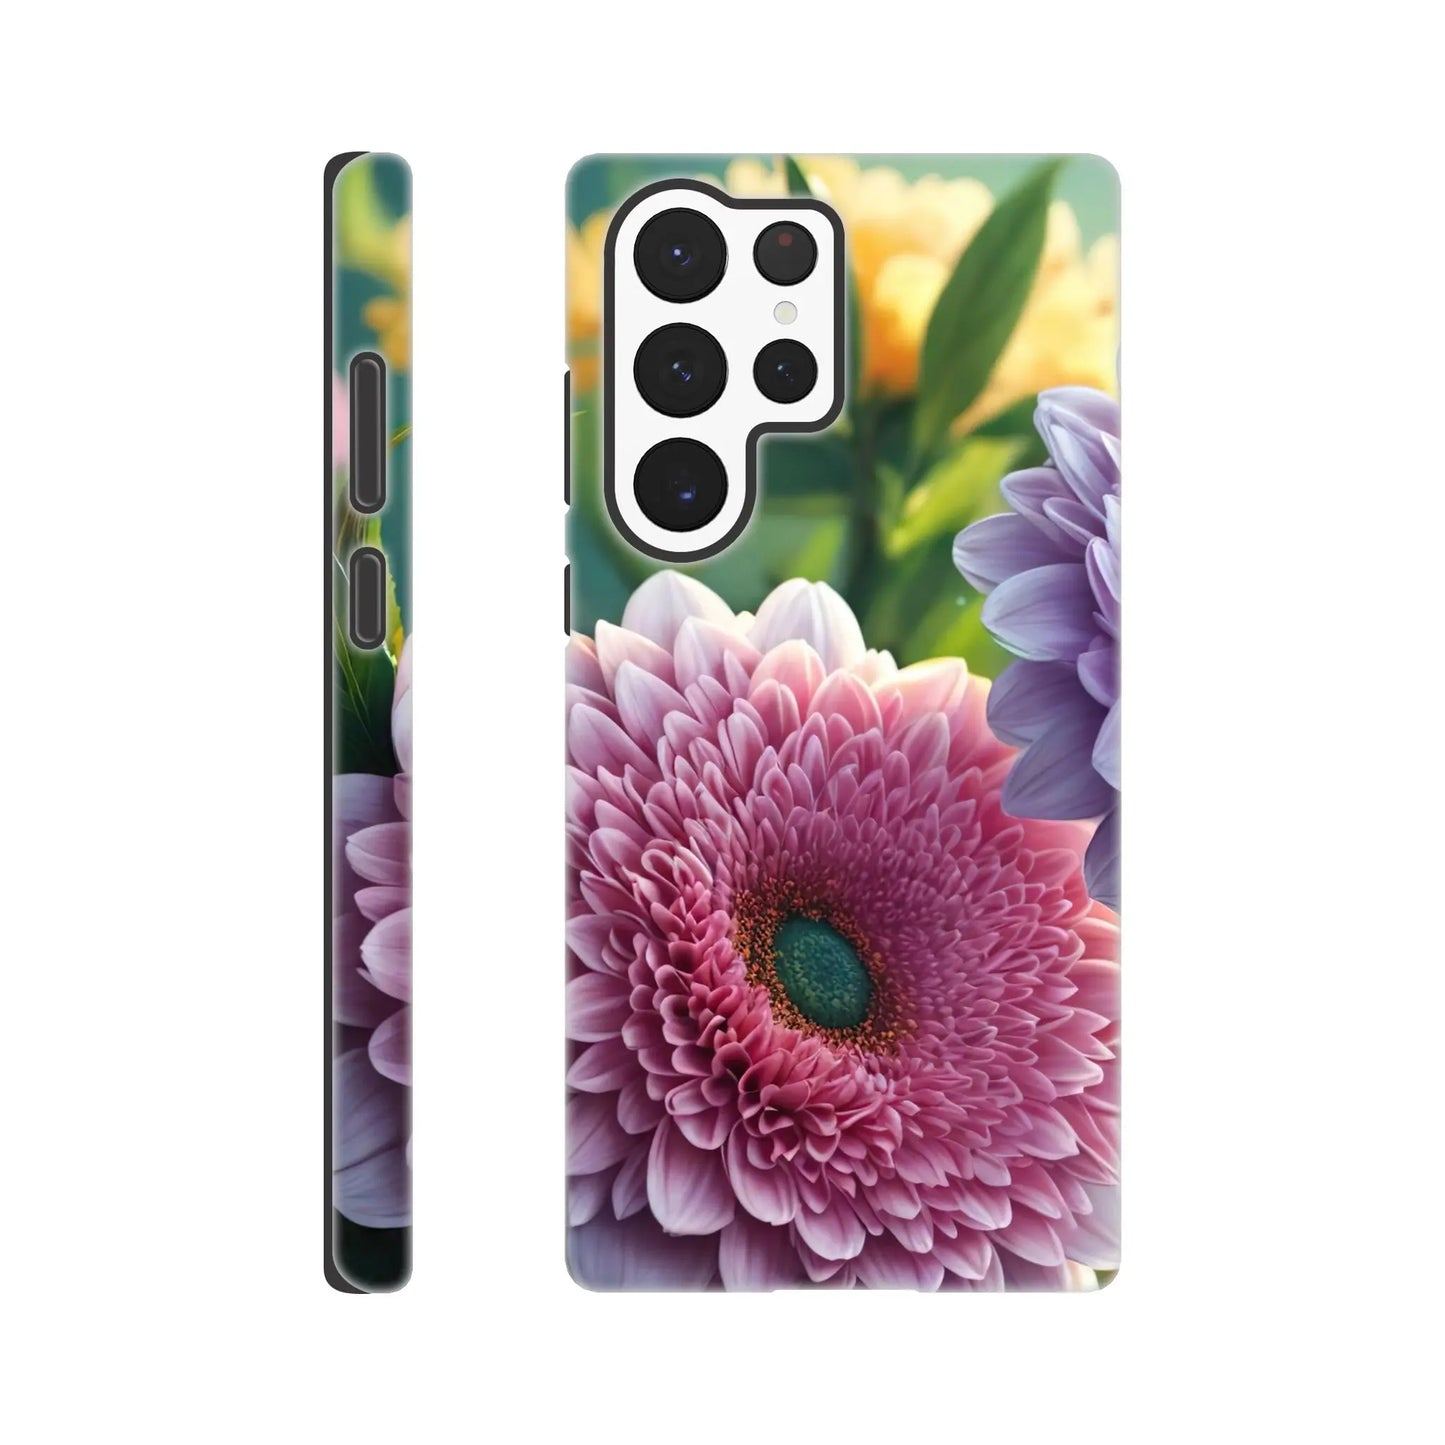 Smartphone-Hülle "Hart" - Blumen Vielfalt - Foto Stil, KI-Kunst, Pflanzen, Galaxy-S22-Ultra - RolConArt